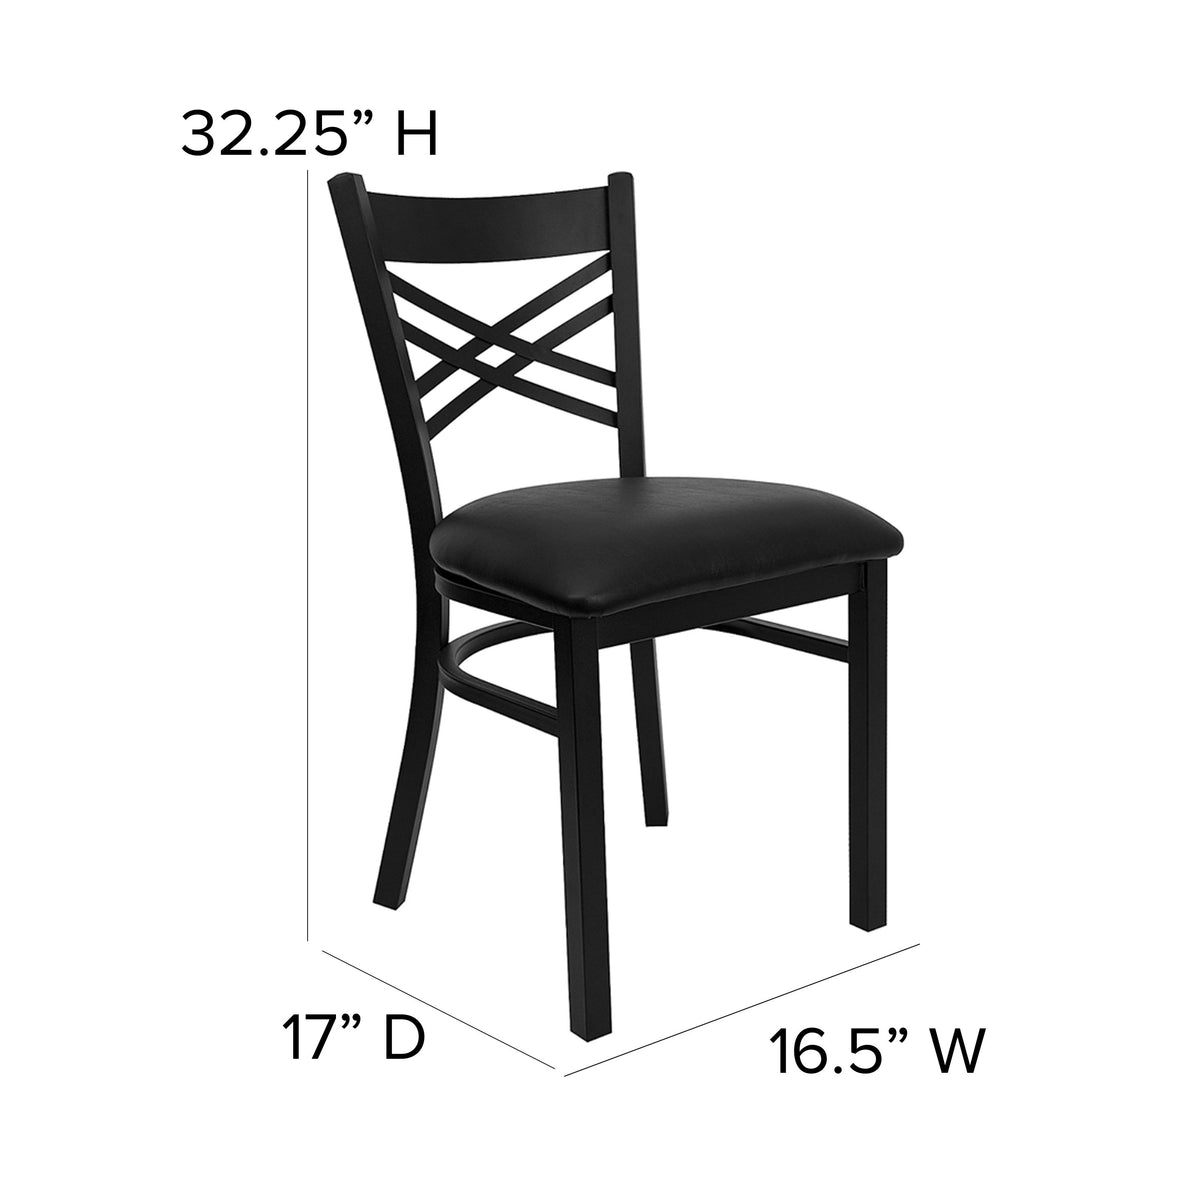 Black Vinyl Seat/Black Metal Frame |#| Black inchXinch Back Metal Restaurant Chair - Black Vinyl Seat